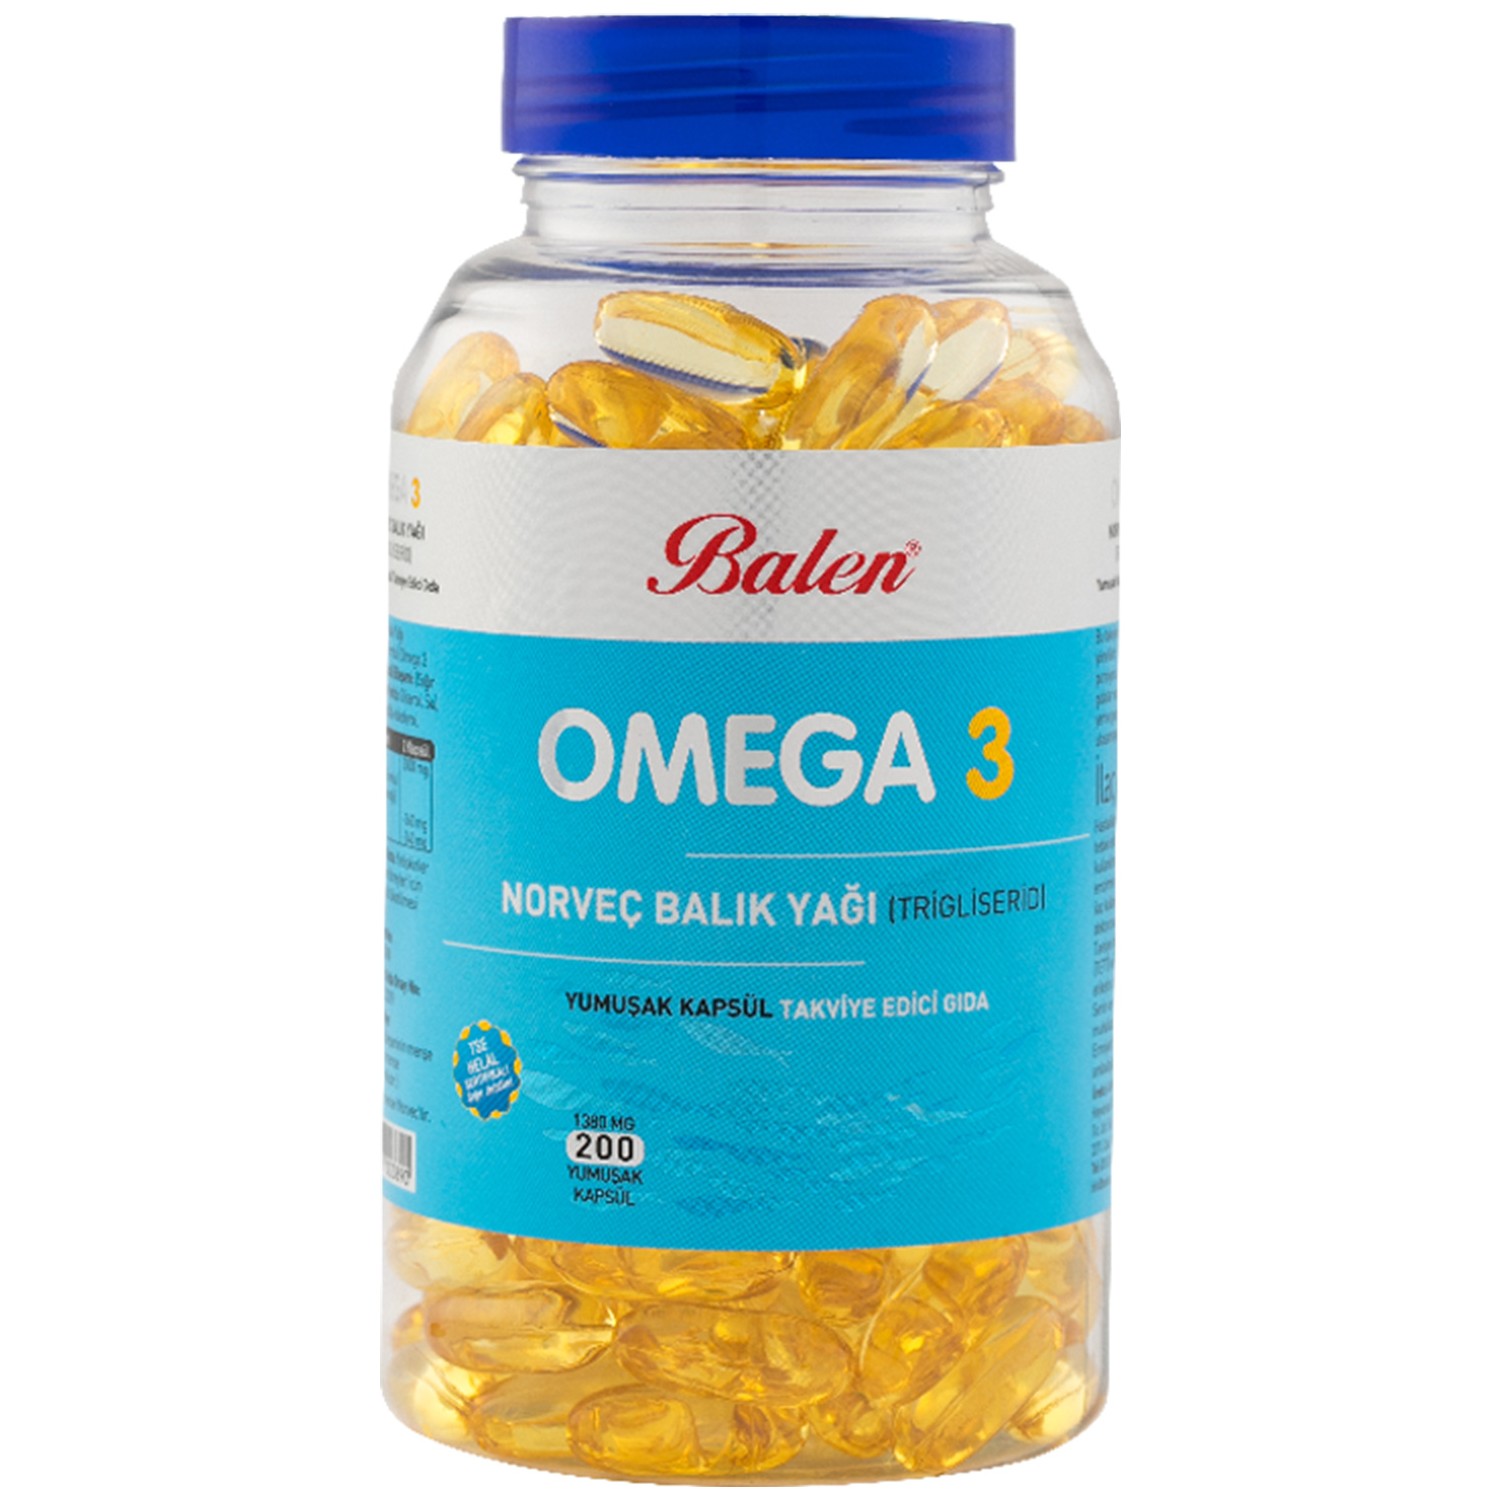 Норвежский рыбий жир Balen Omega-3 (триглицерид) 1380 мг, 200 капсул рыбий жир 1000 мг 300 капсул 21st century